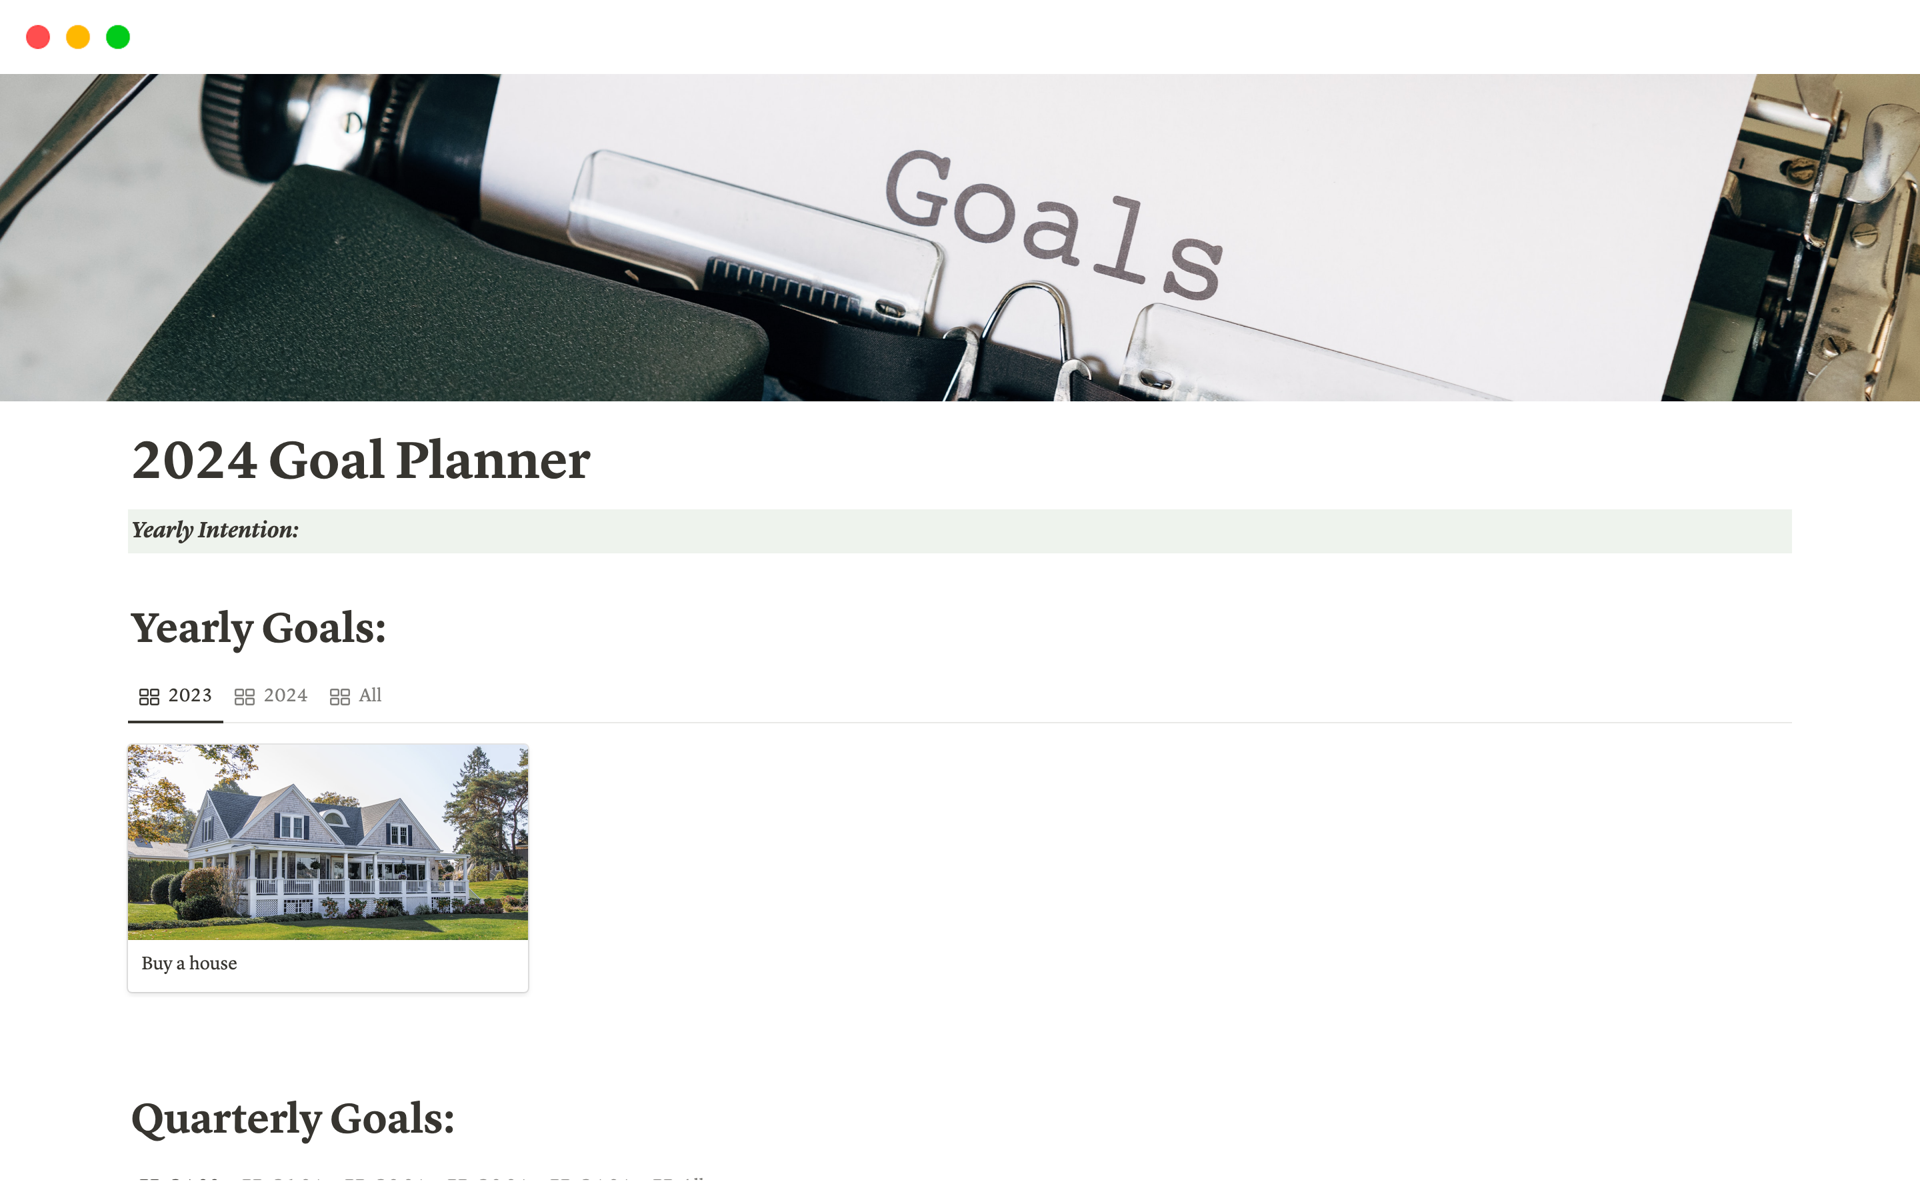 Vista previa de una plantilla para 2024 Goal Planner